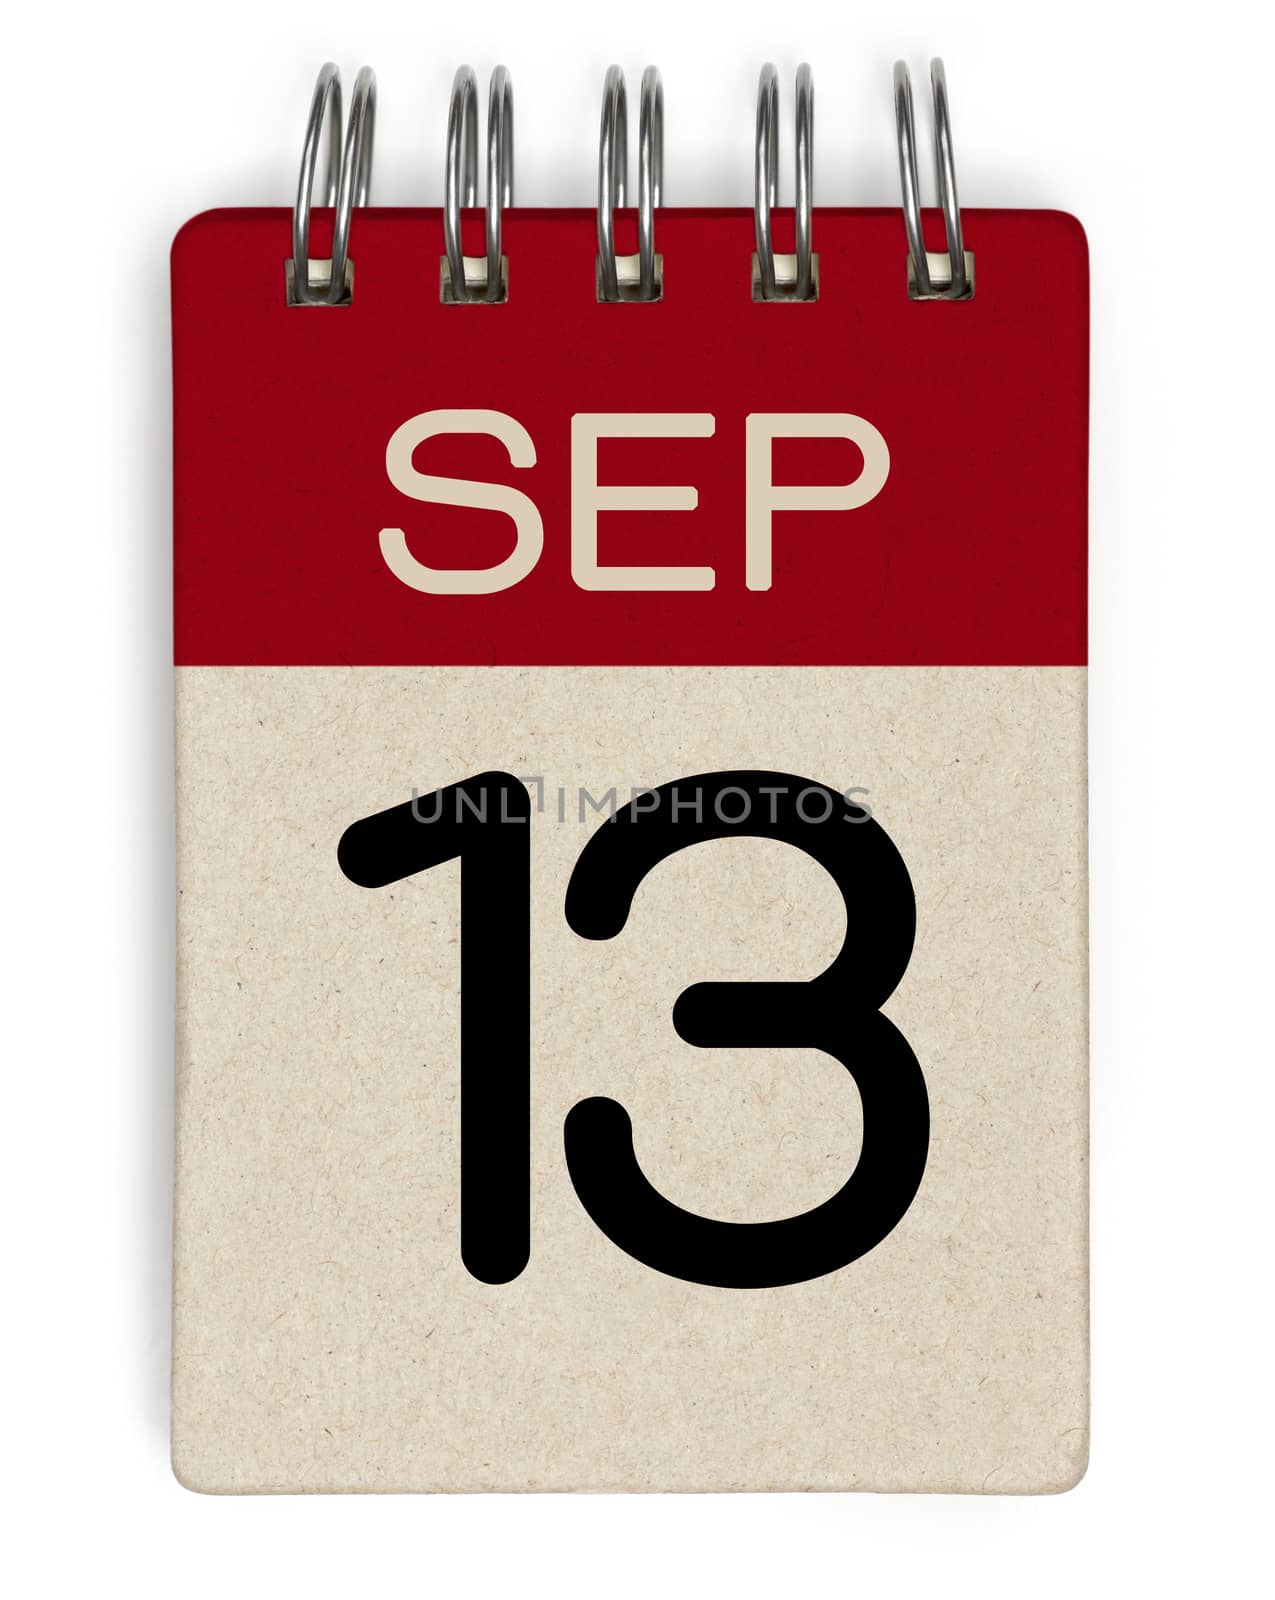 sep calendar